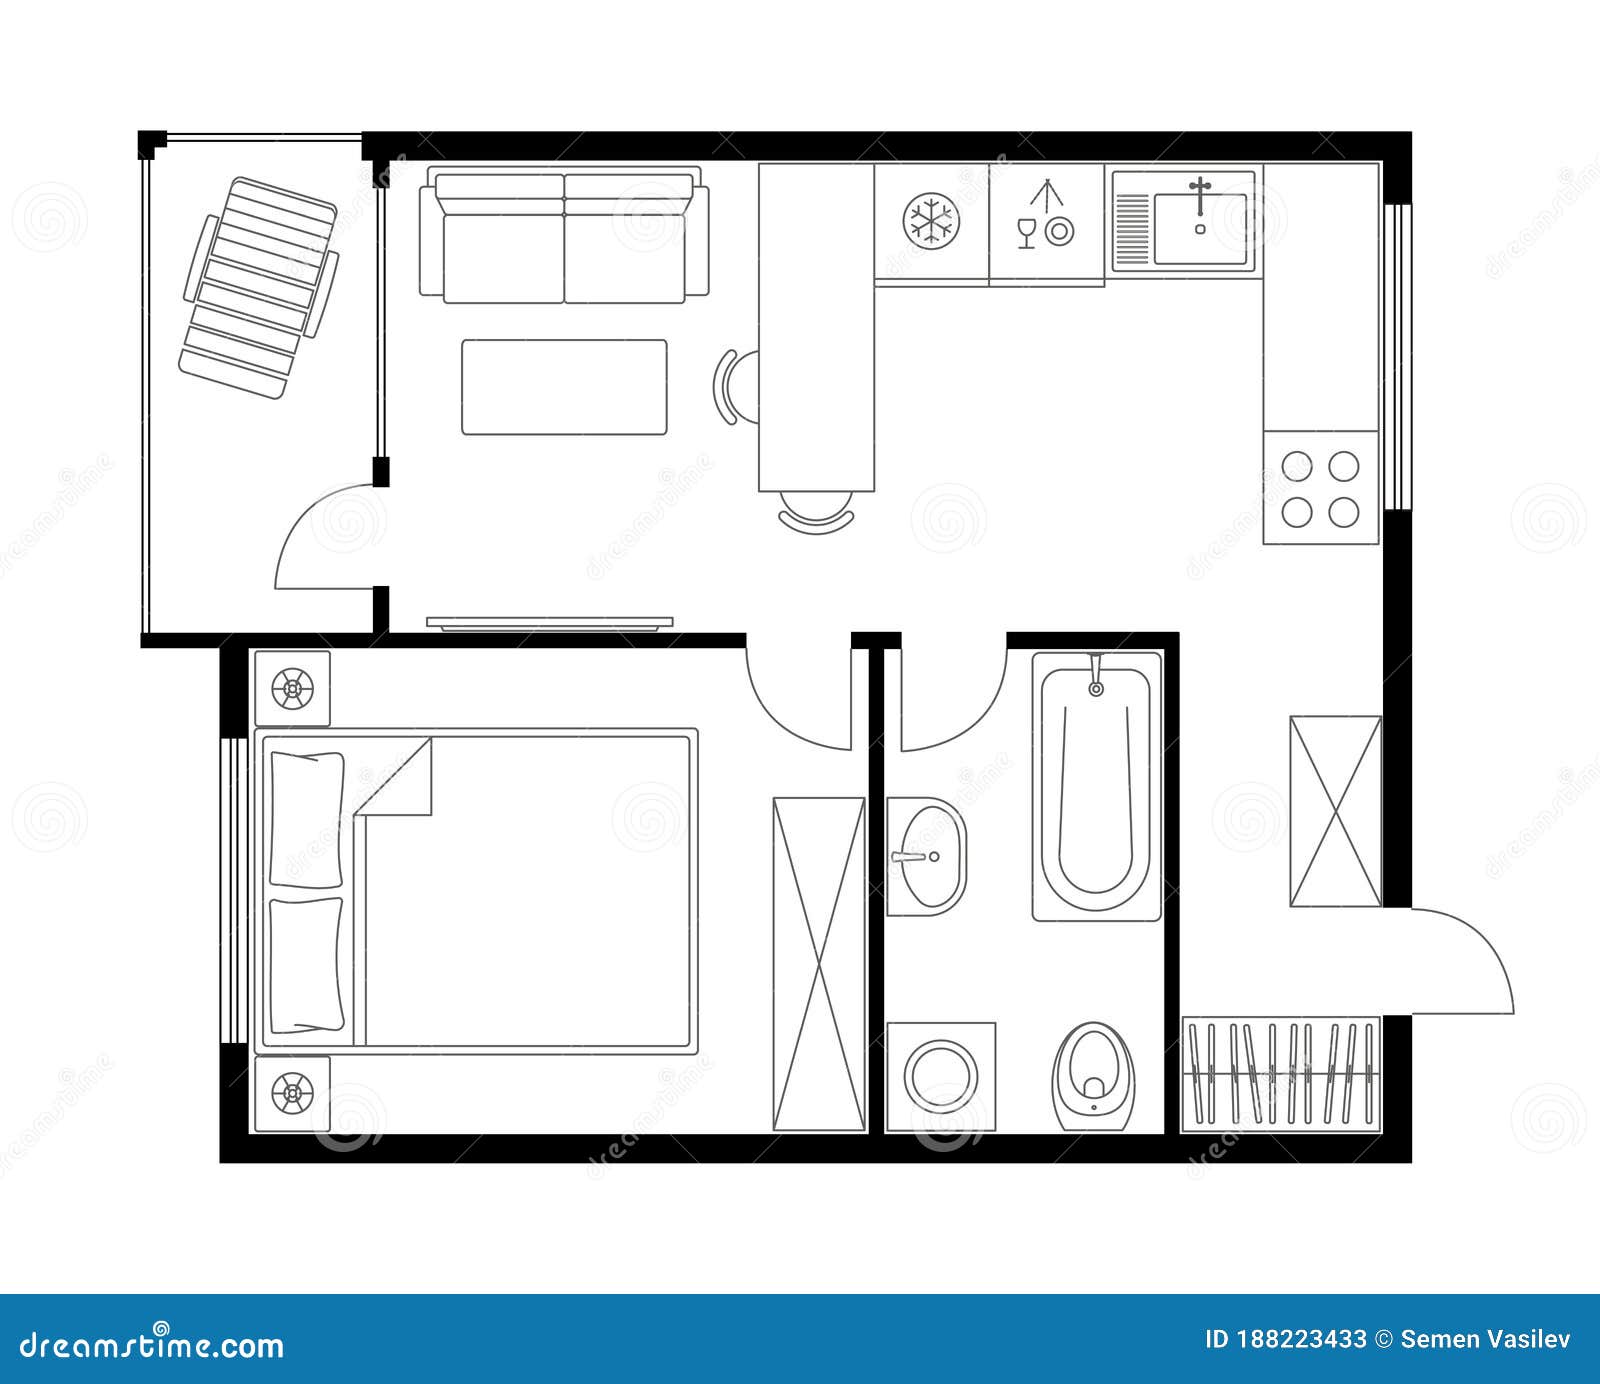 Architecture Plan of Apartment Layout Studio, Condominium, Flat, House.  Stock Vector - Illustration of interior, building: 188223433